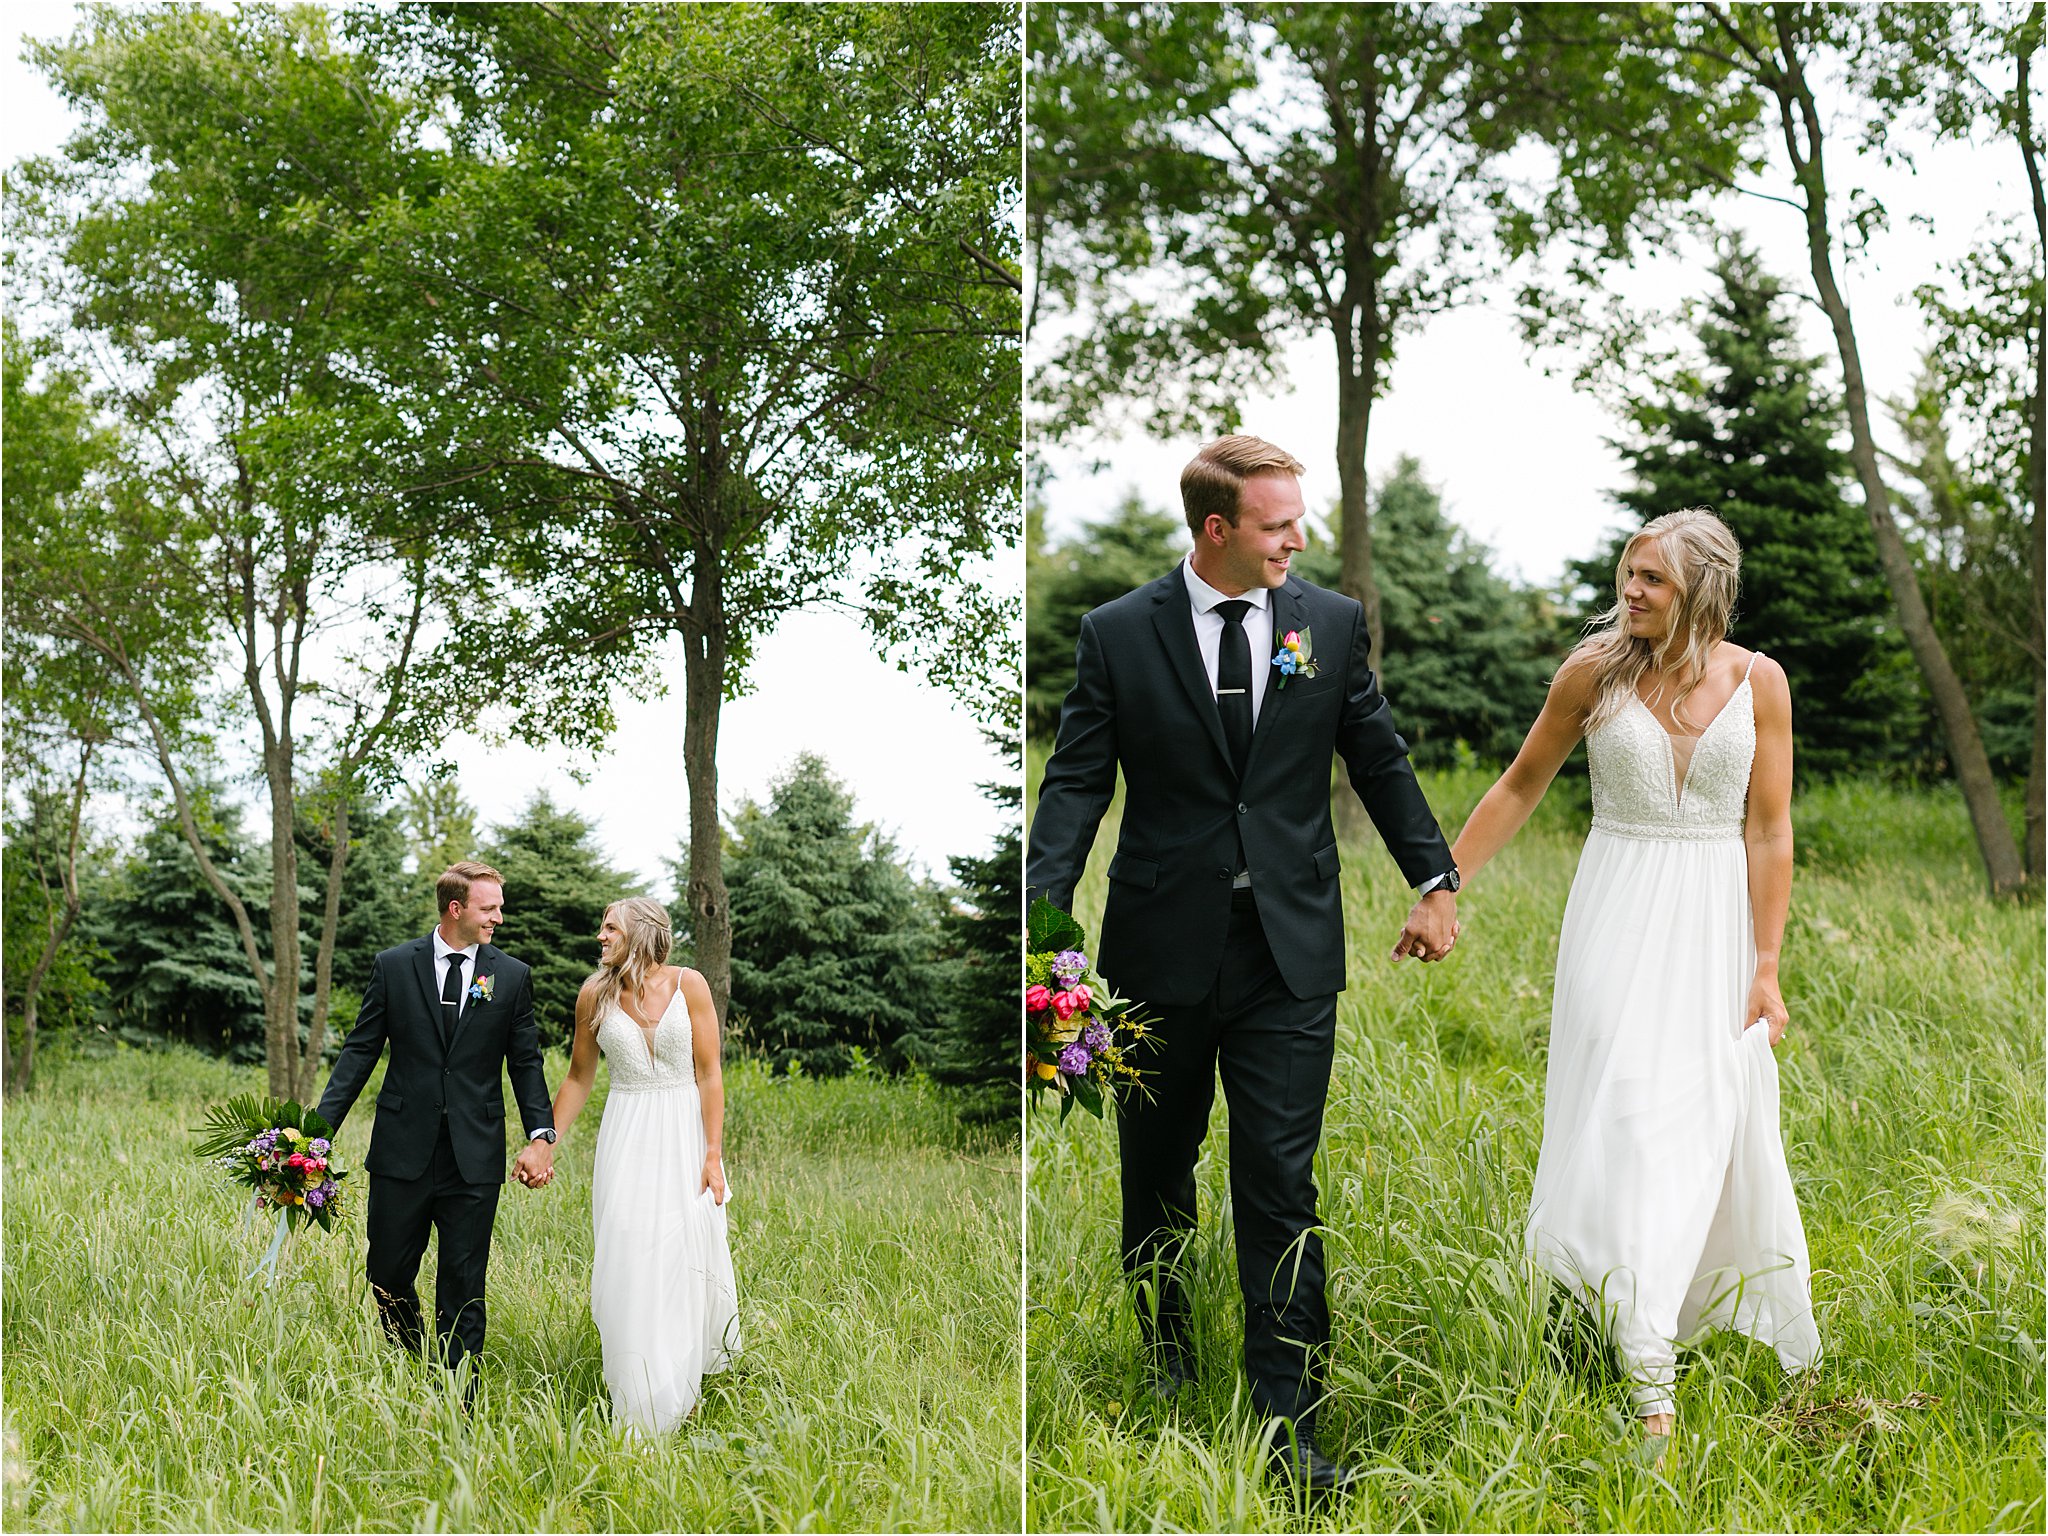 bride and groom walking through grass field